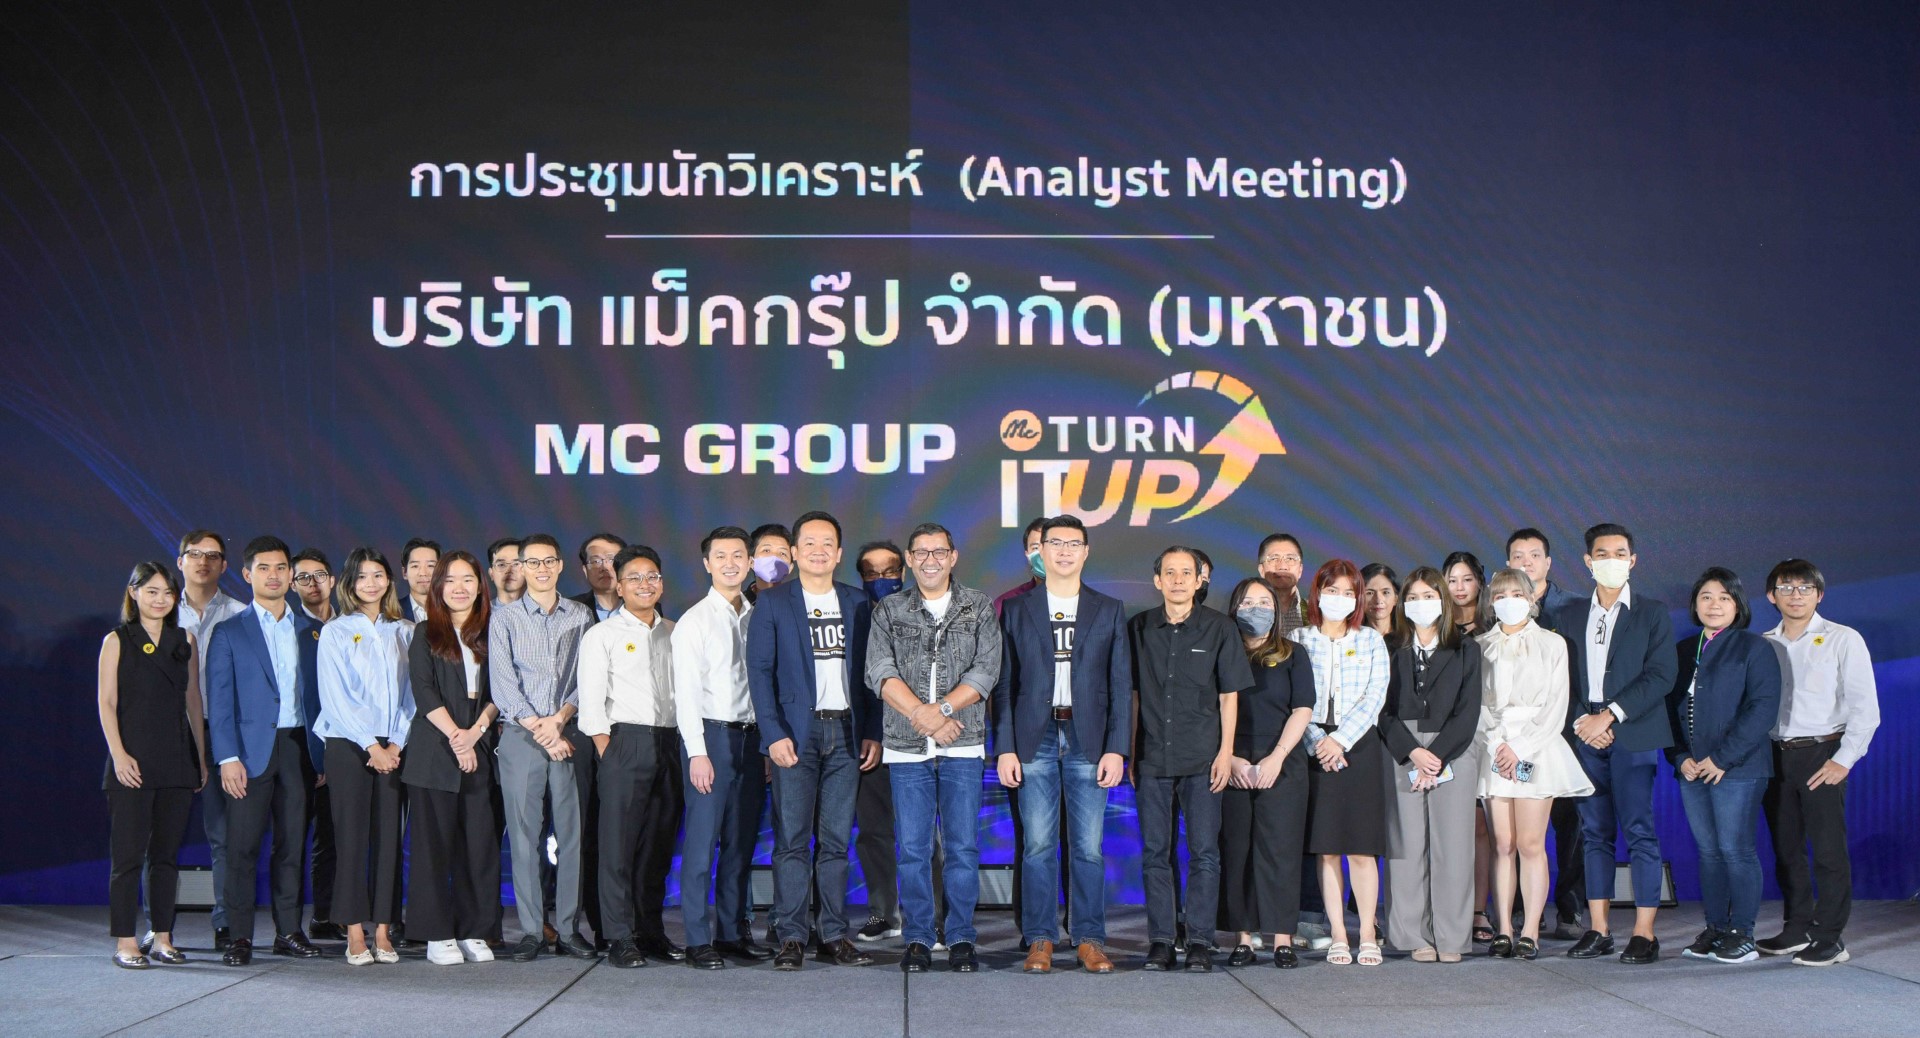 MC GROUP Analyst Meeting Pics.jpg